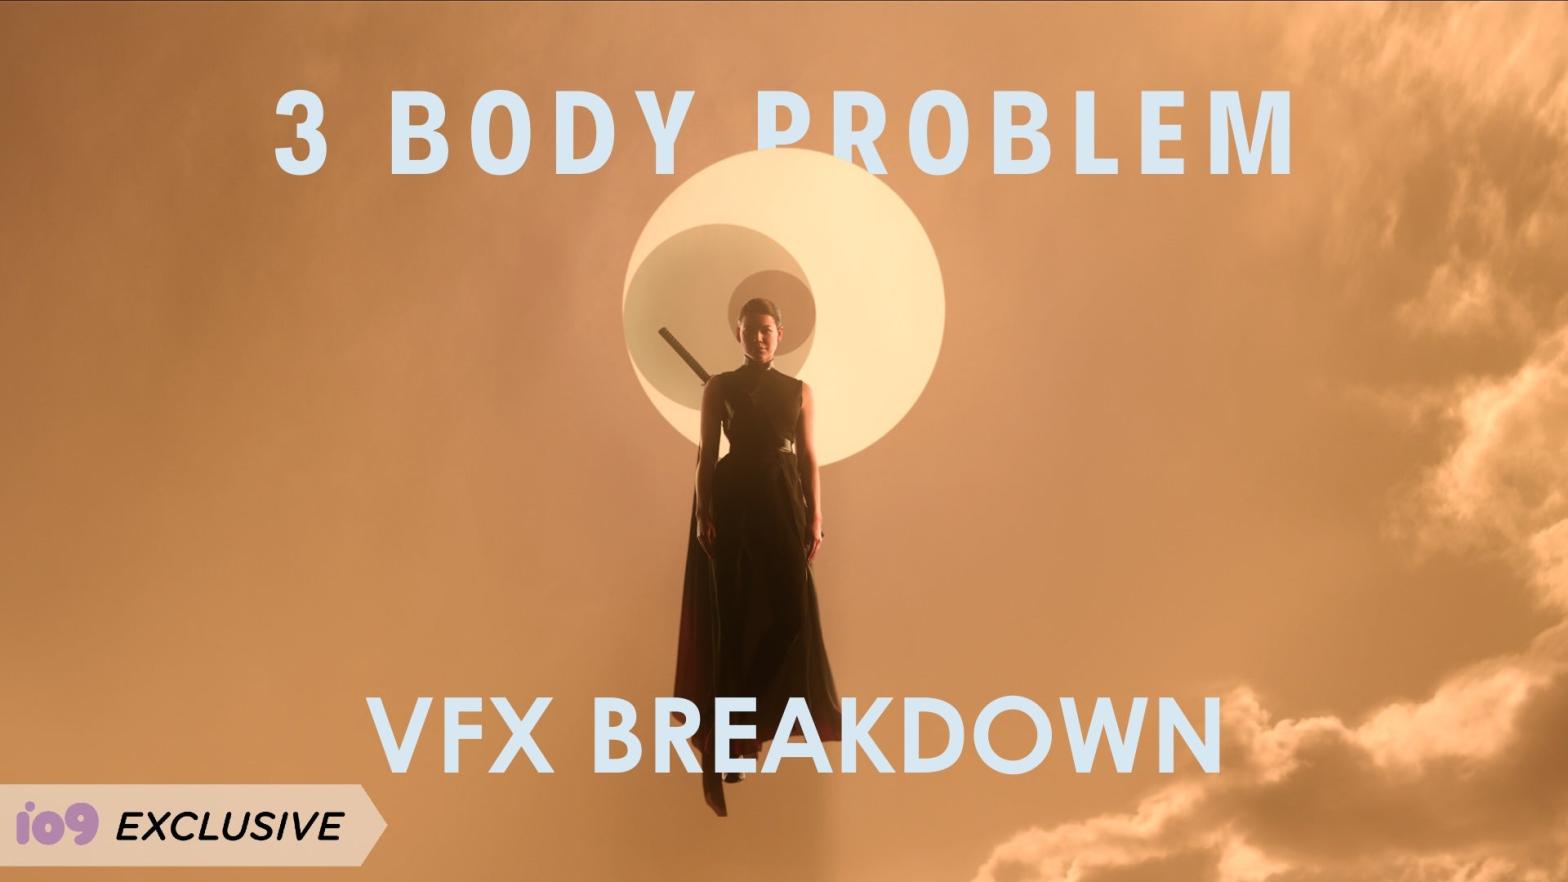 3 Body Problem’s VFX Designer on Creating a Sci-Fi World